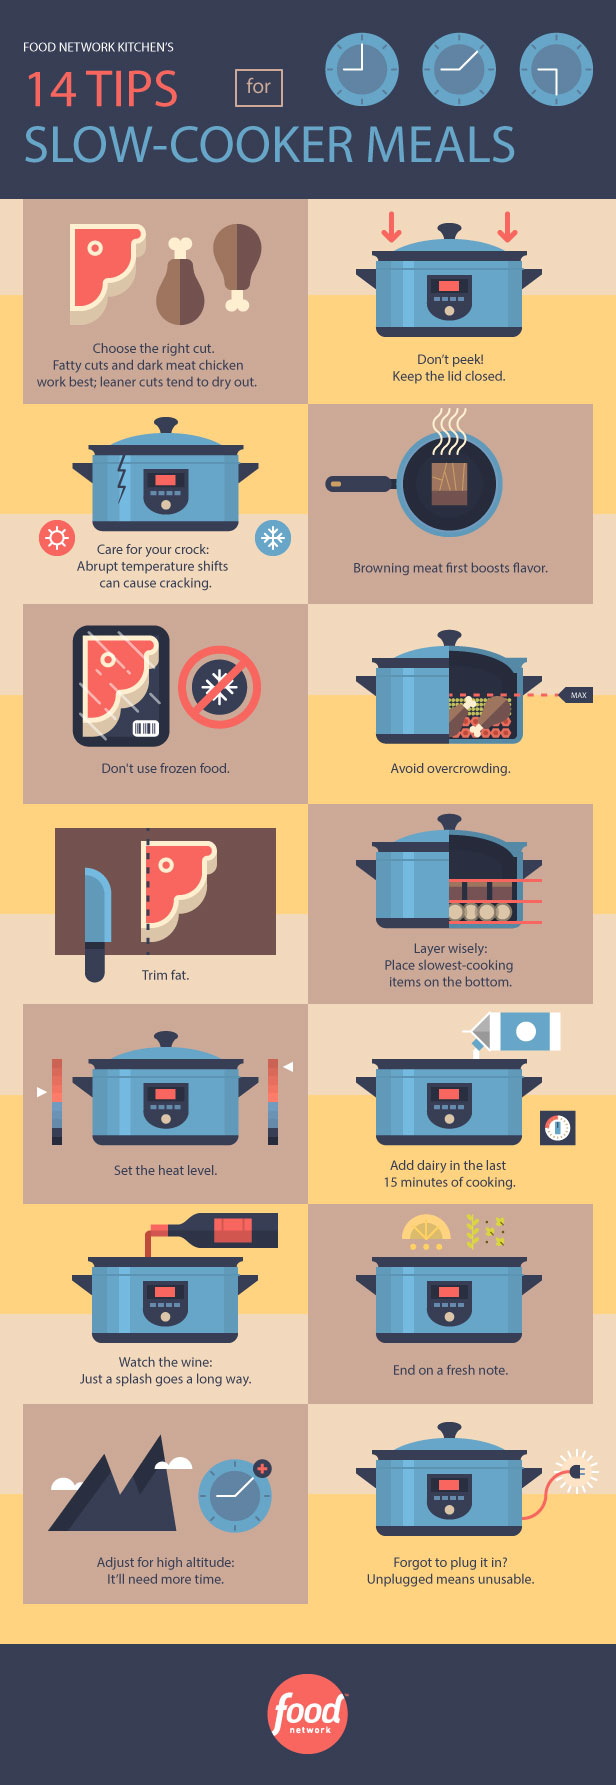 Best Tips for Slow-Cooker Meals : Food Network